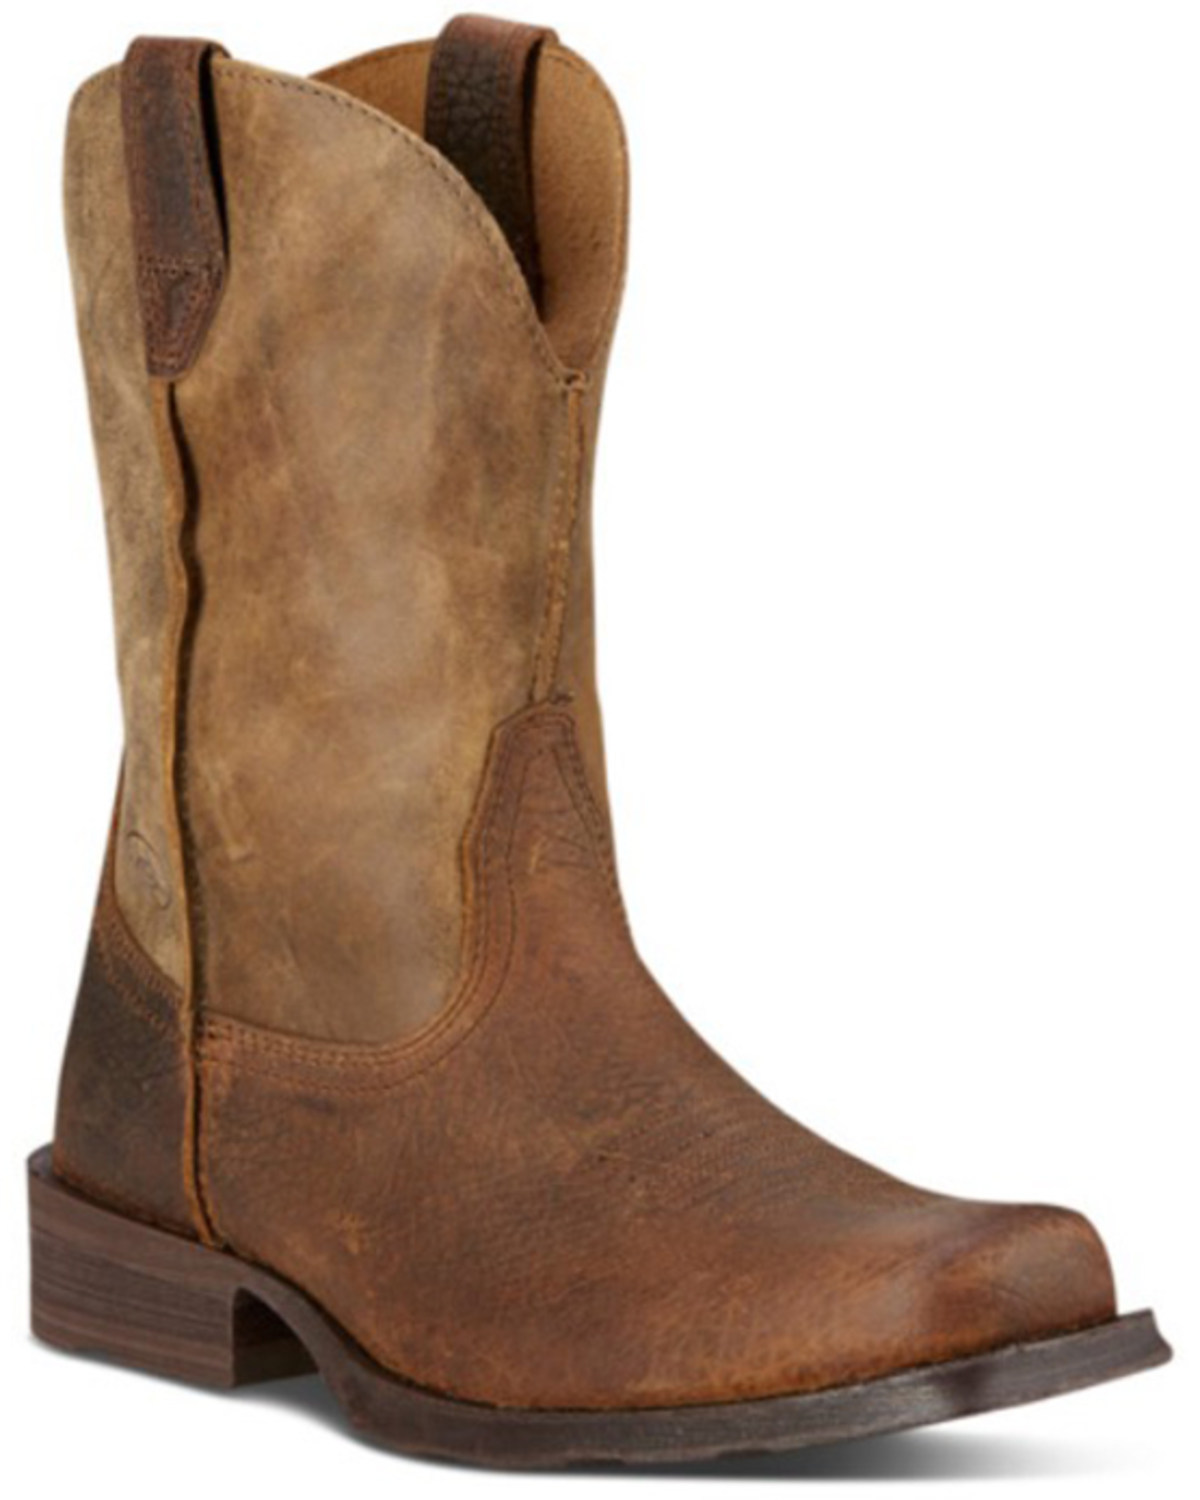 Most comfortable cowboy boots for men 